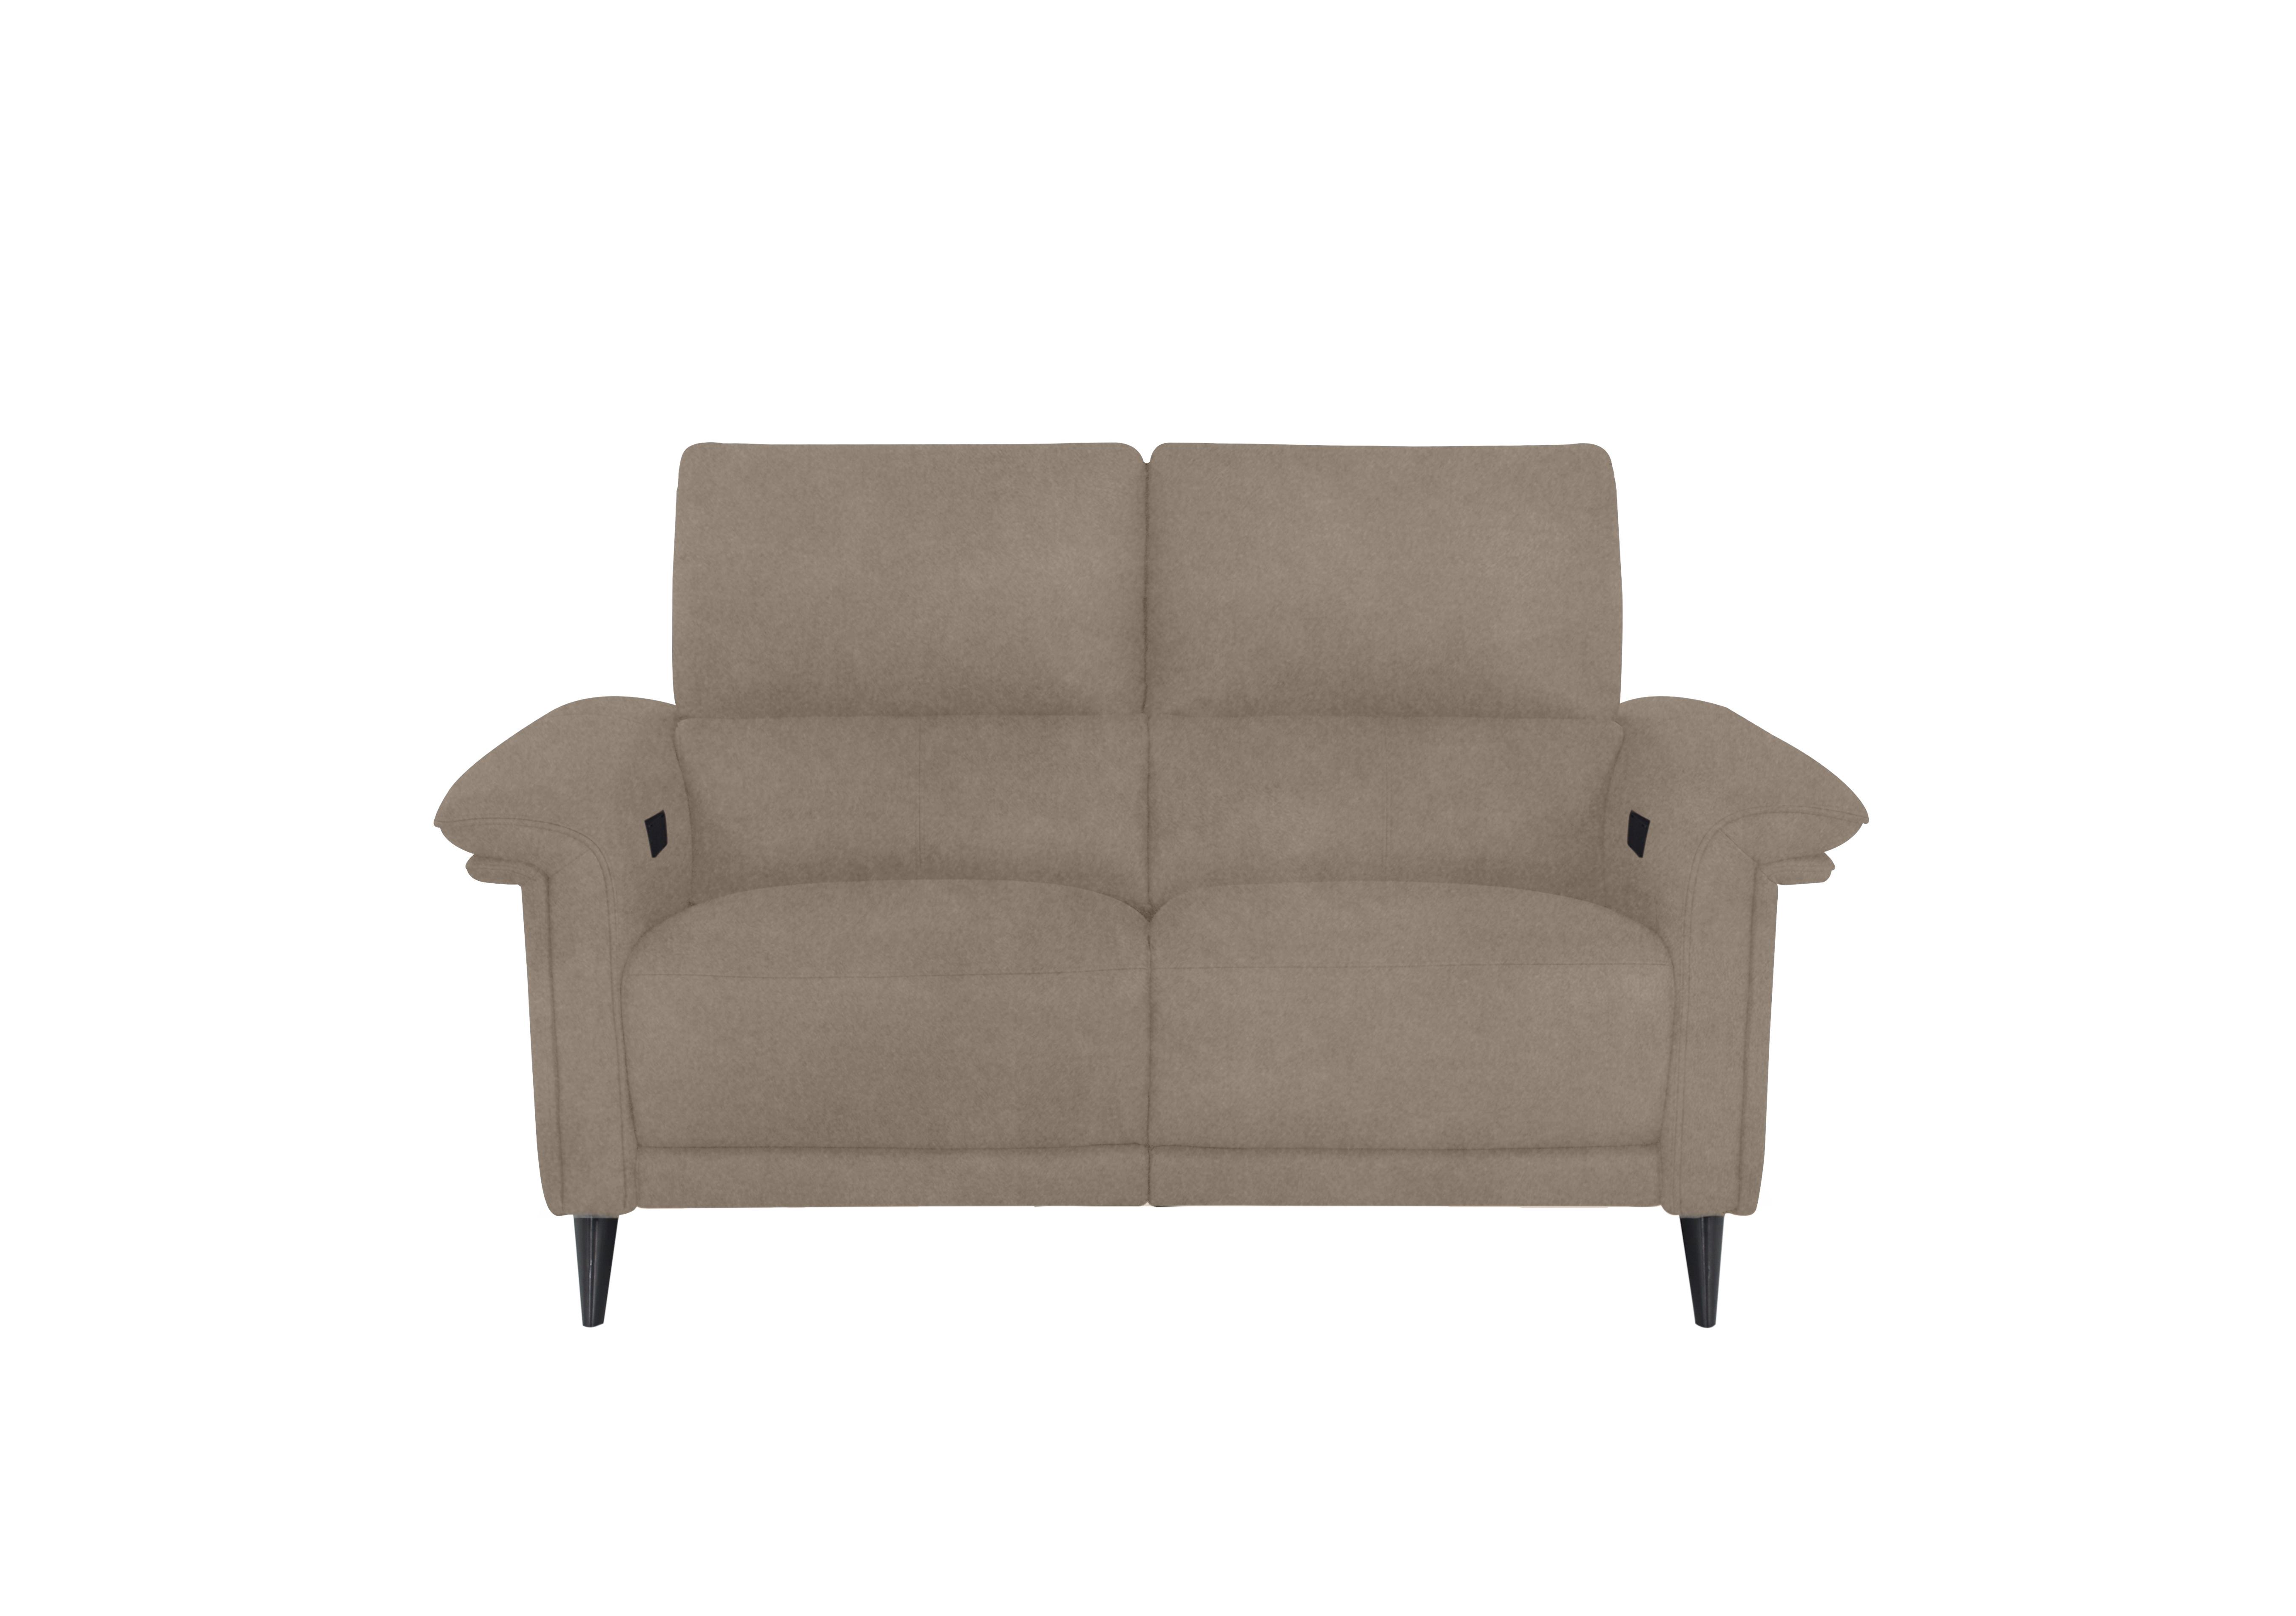 Huxley 2 Seater Fabric Sofa in Fab-Meg-R32 Light Khaki on Furniture Village